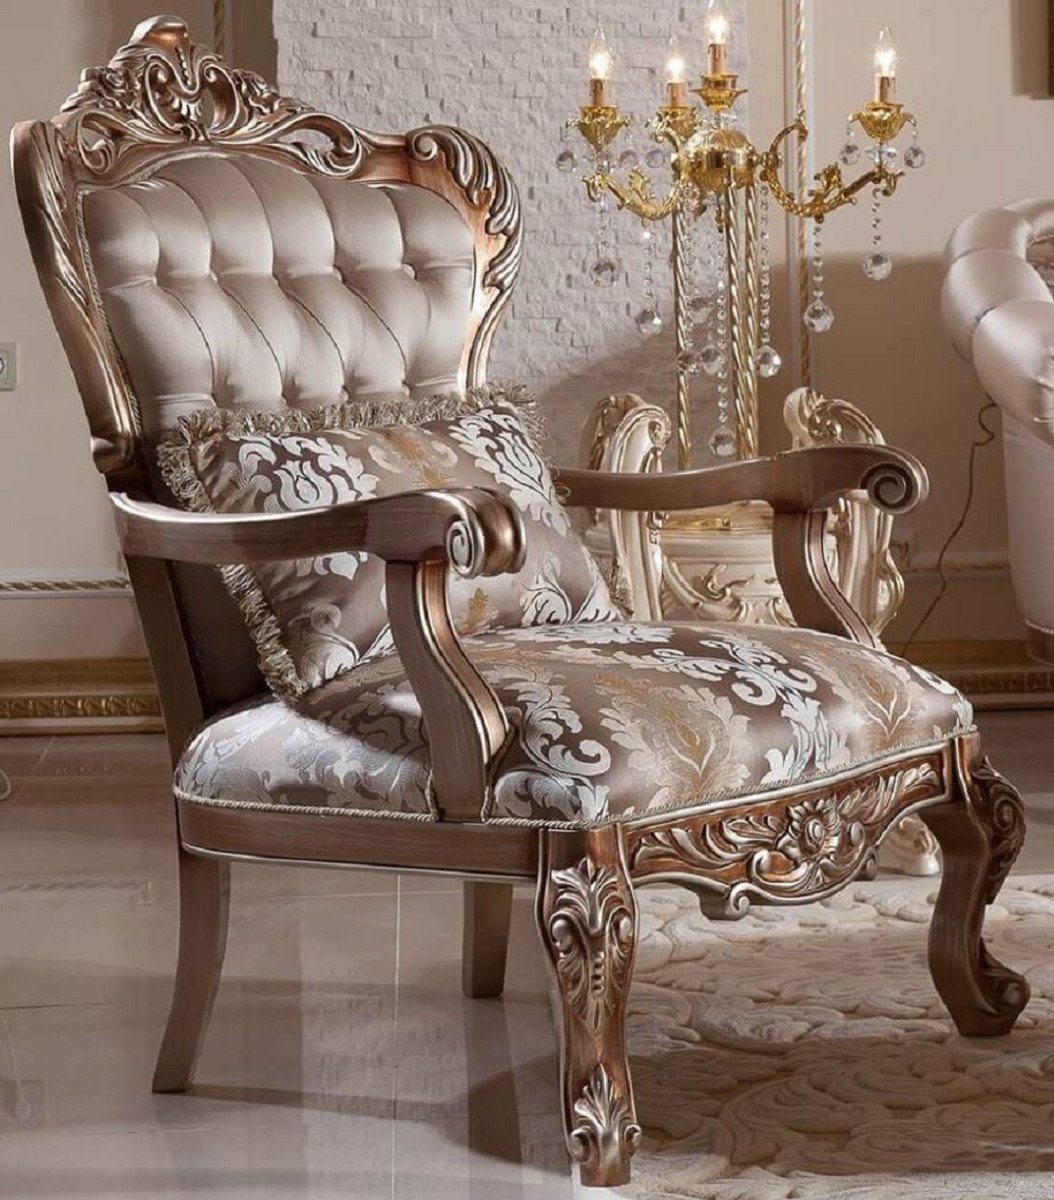 Casa Padrino Sessel Luxus Barock Sessel Grau / Kupfer / Silber -  Handgefertigter Barockstil Wohnzimmer Sessel mit elegantem Muster - Barock  Wohnzimmer Möbel - Edel & Prunkvoll